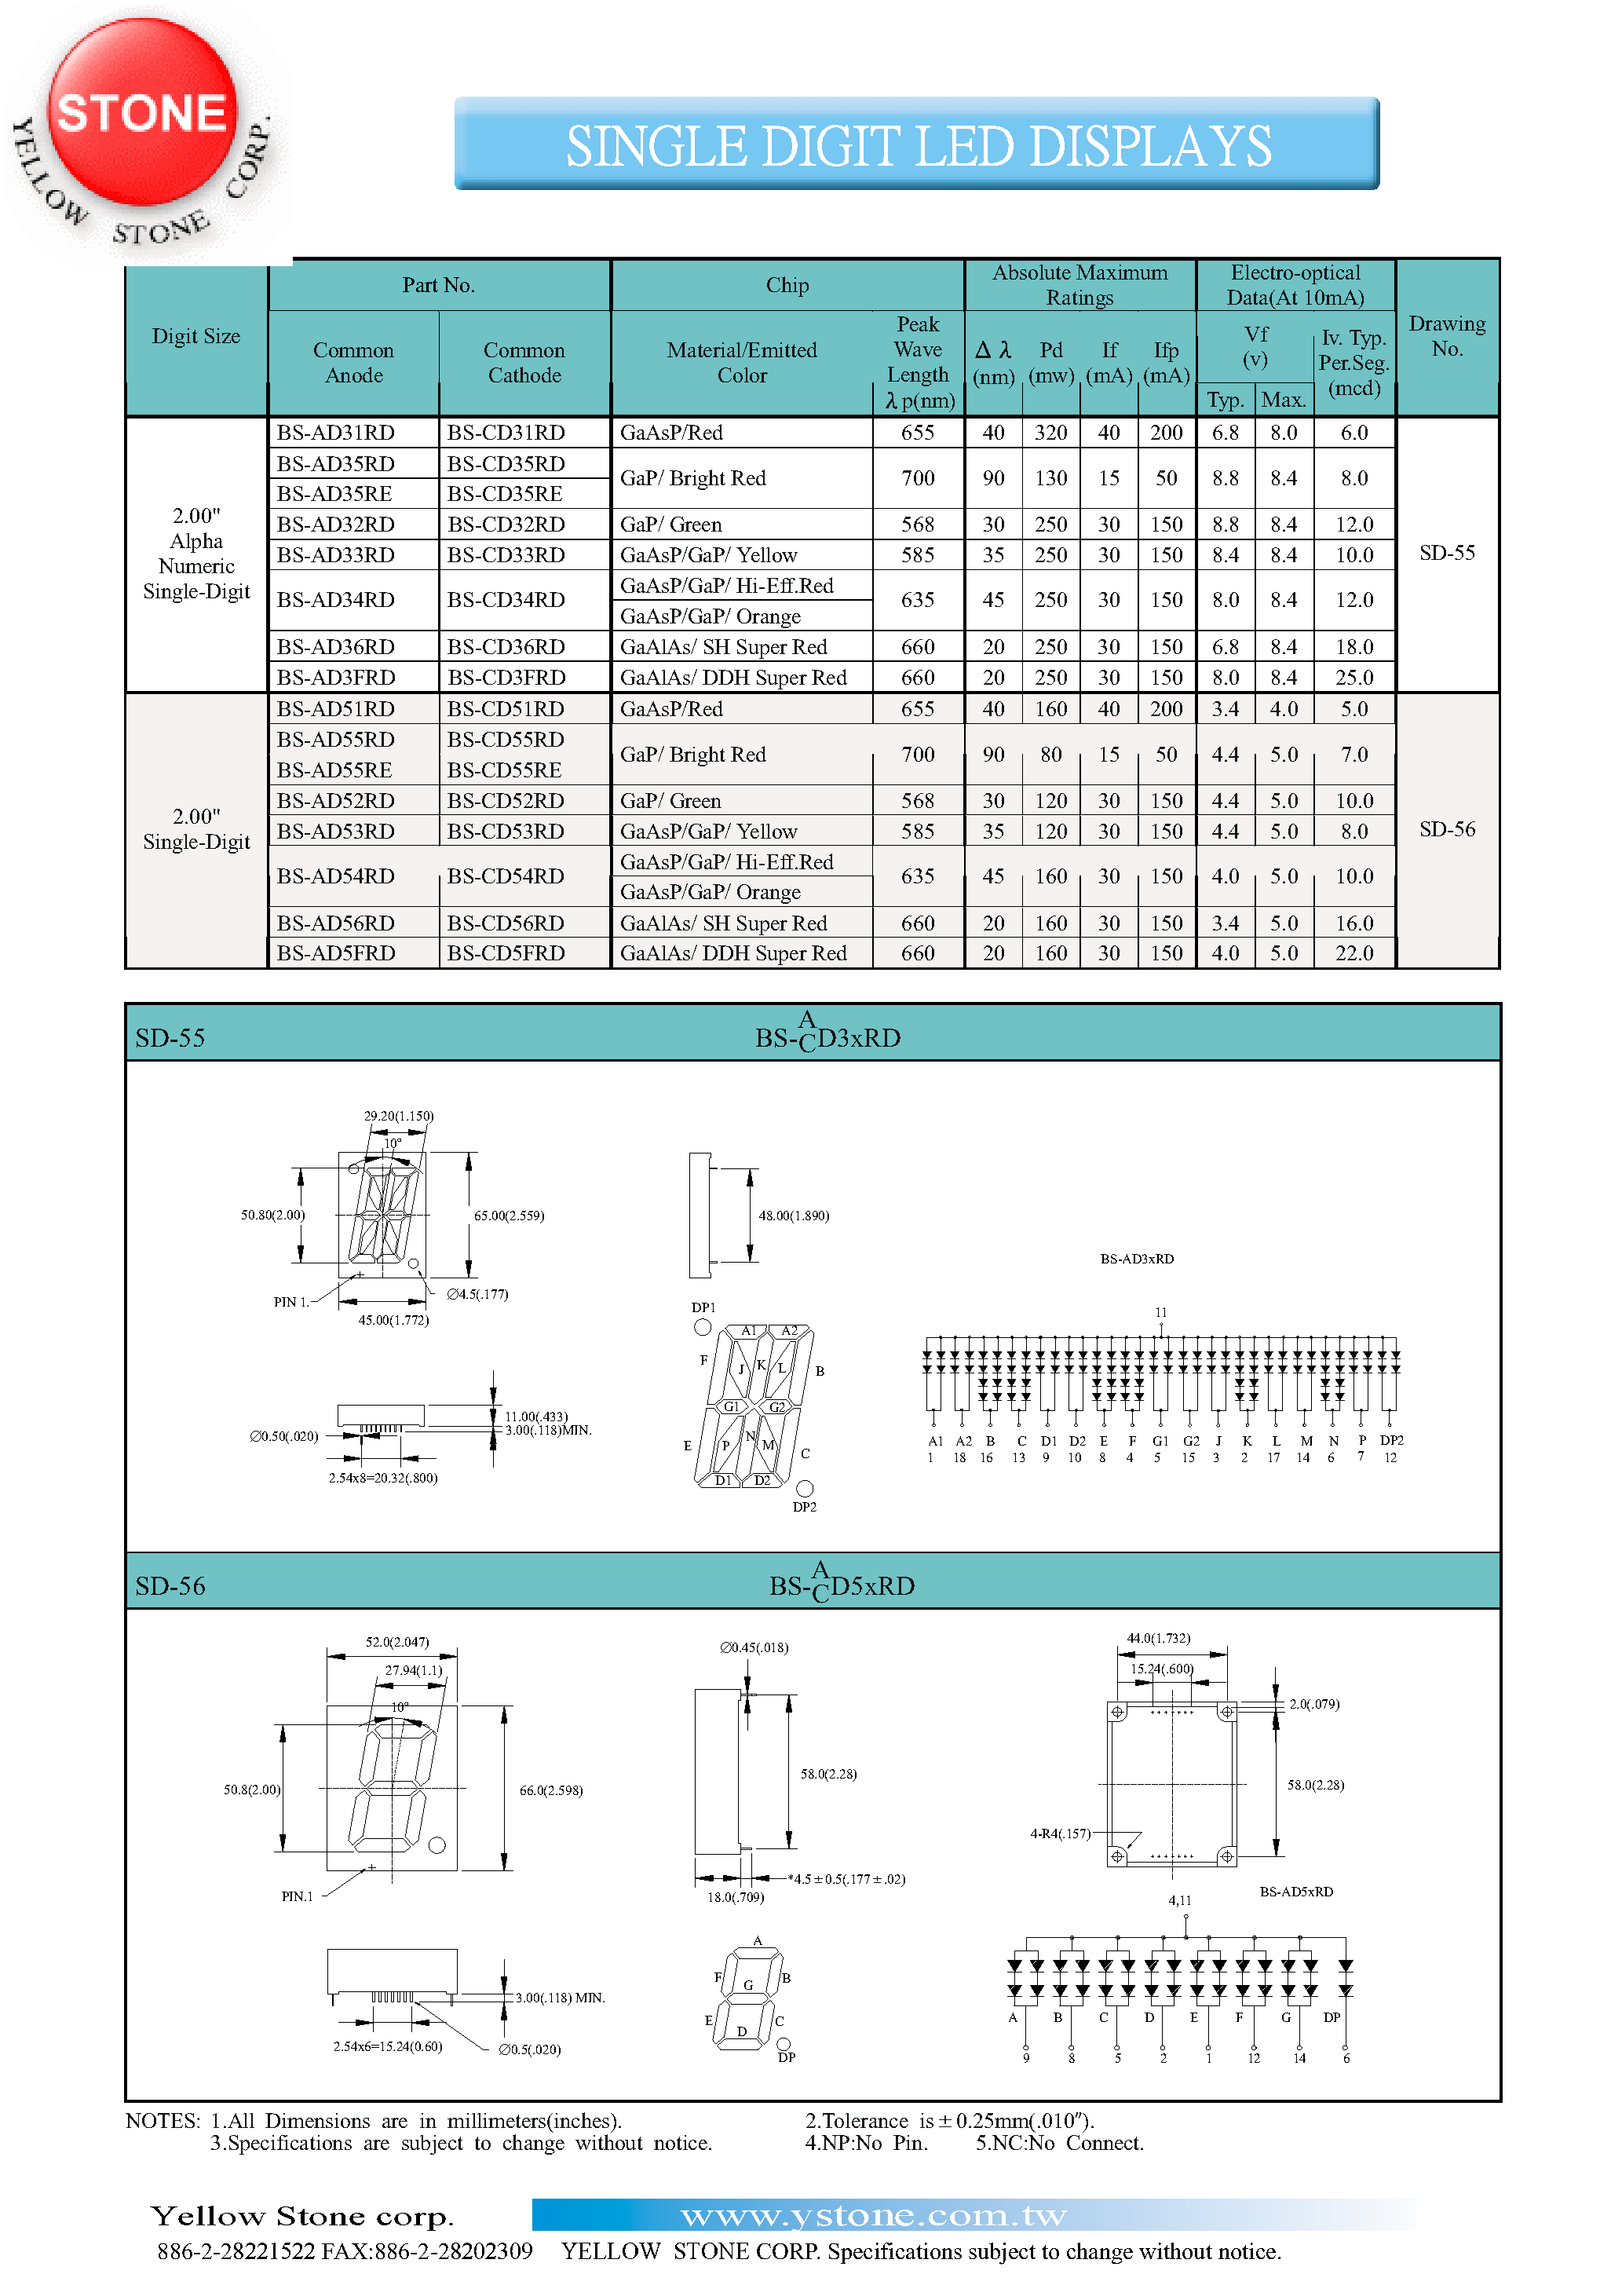 Datasheet BS-AD31RD - SINGLE DIGIT LED DISPLAYS page 1